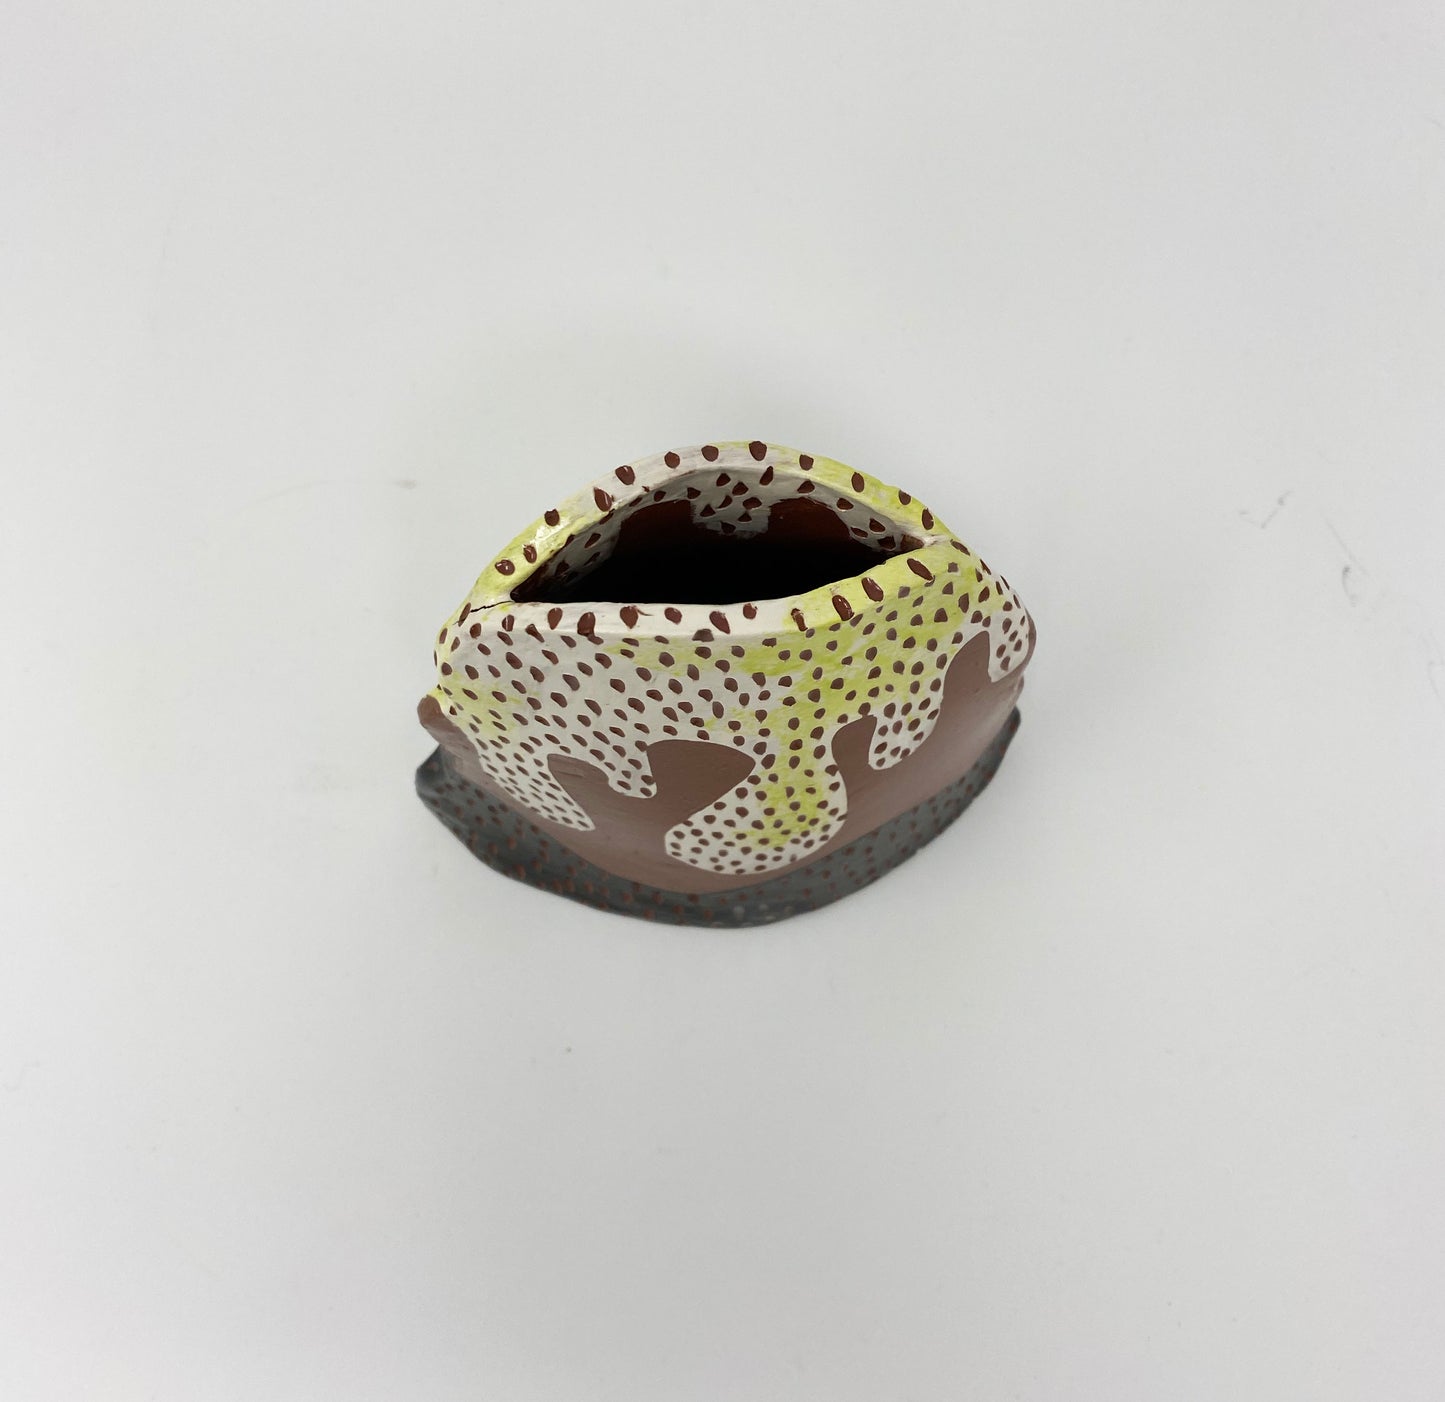 Drip Ceramic Vase by Helen Casey